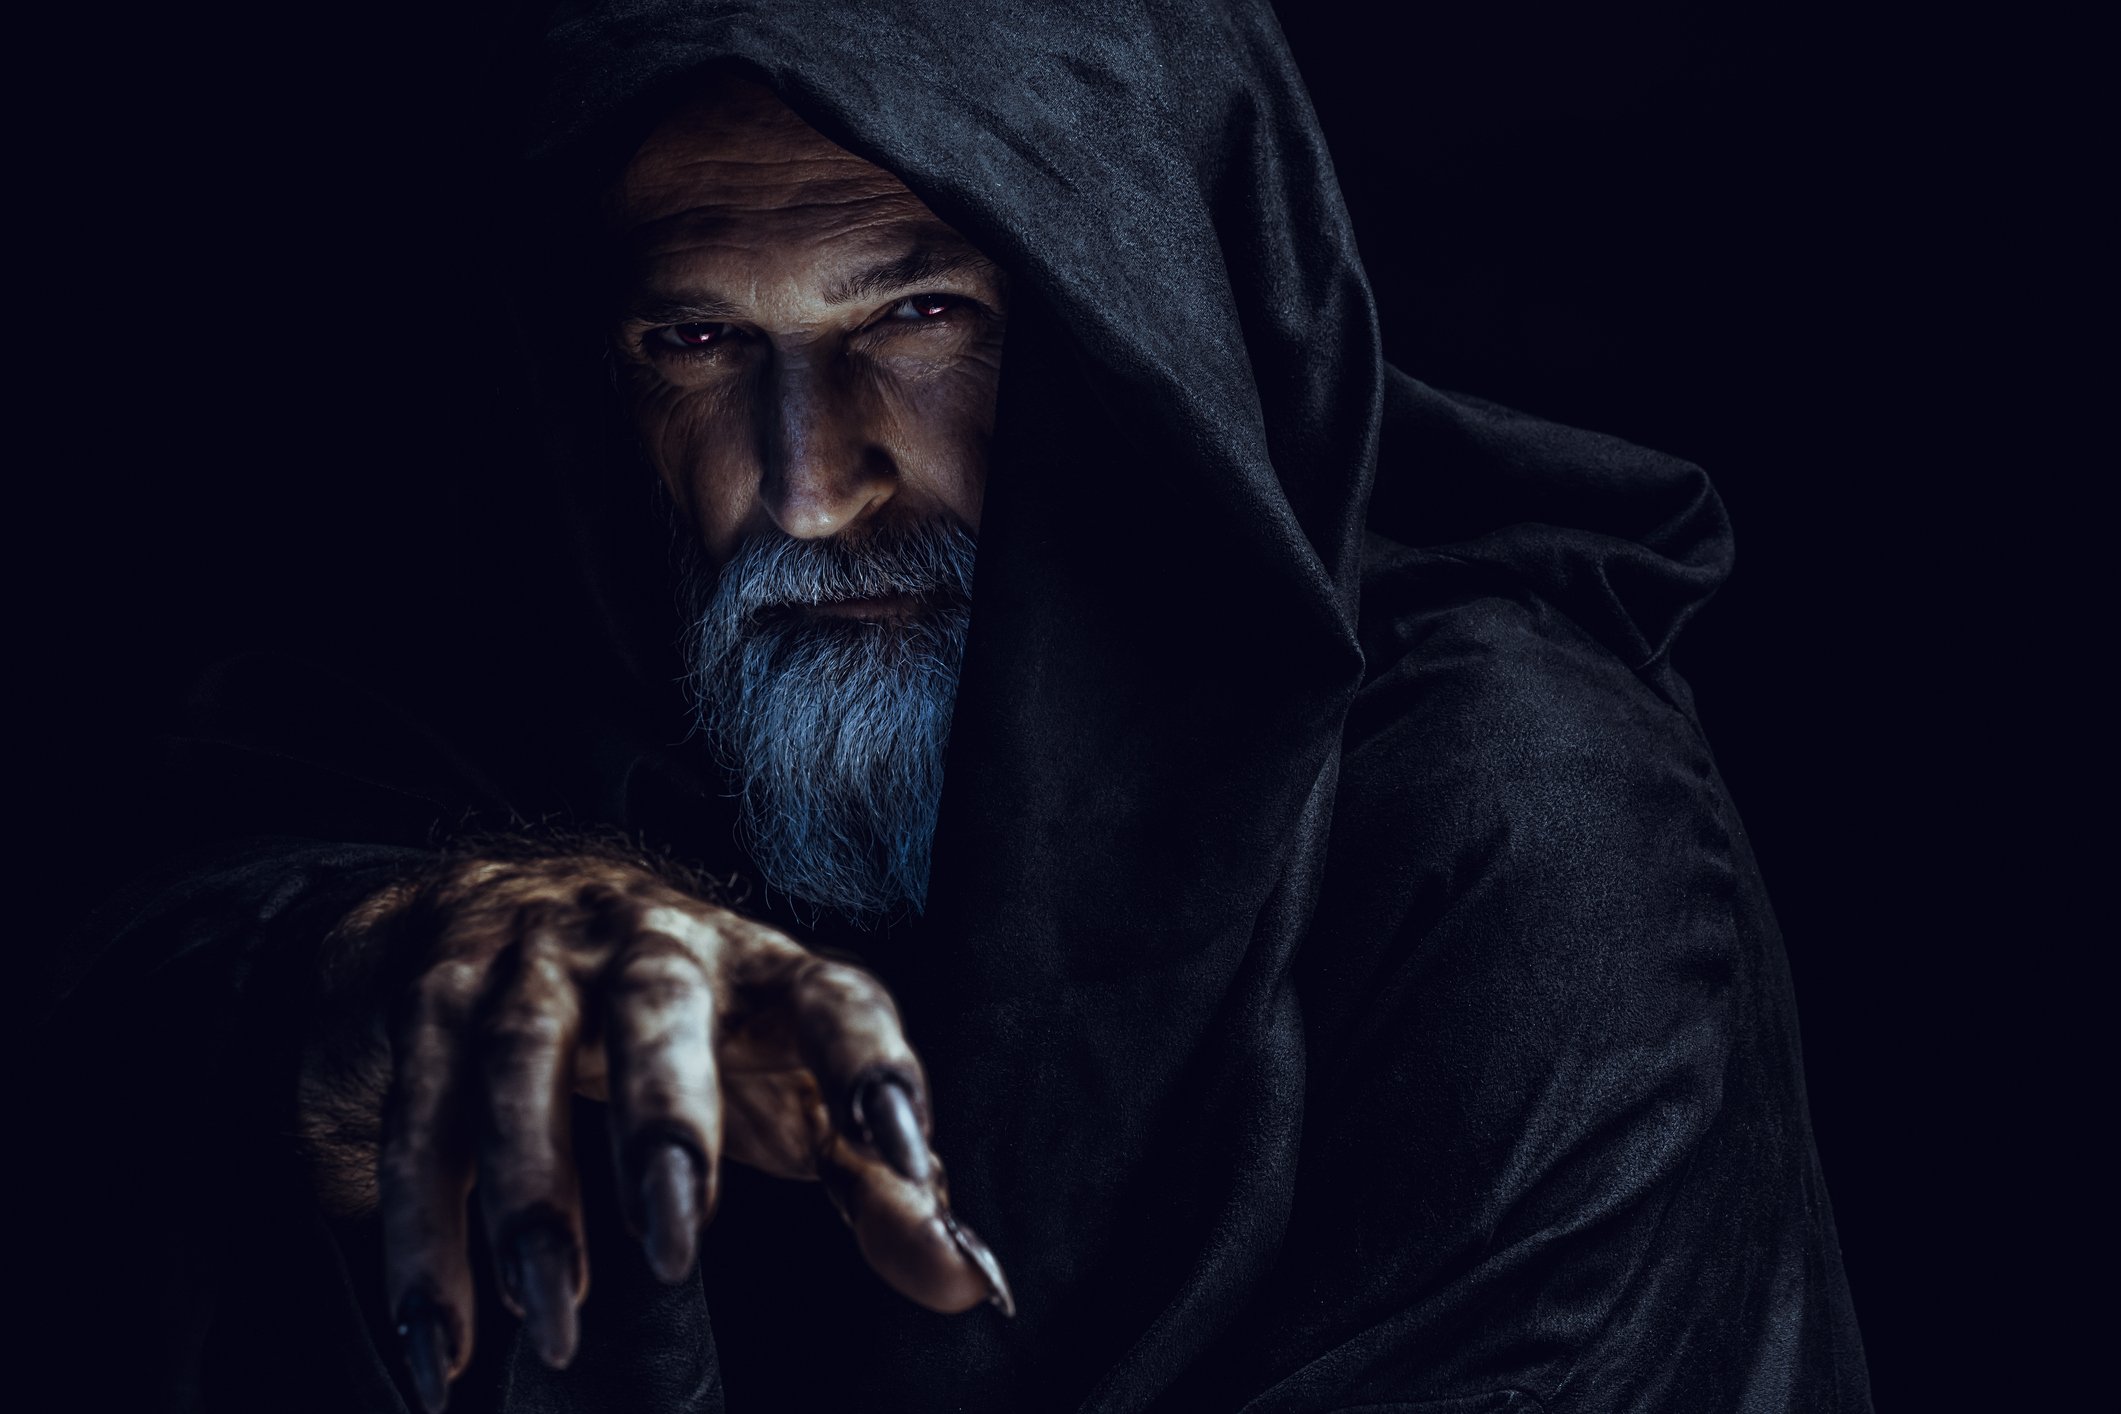 Wizard with a grey beard Halloween costume | Gillette UK